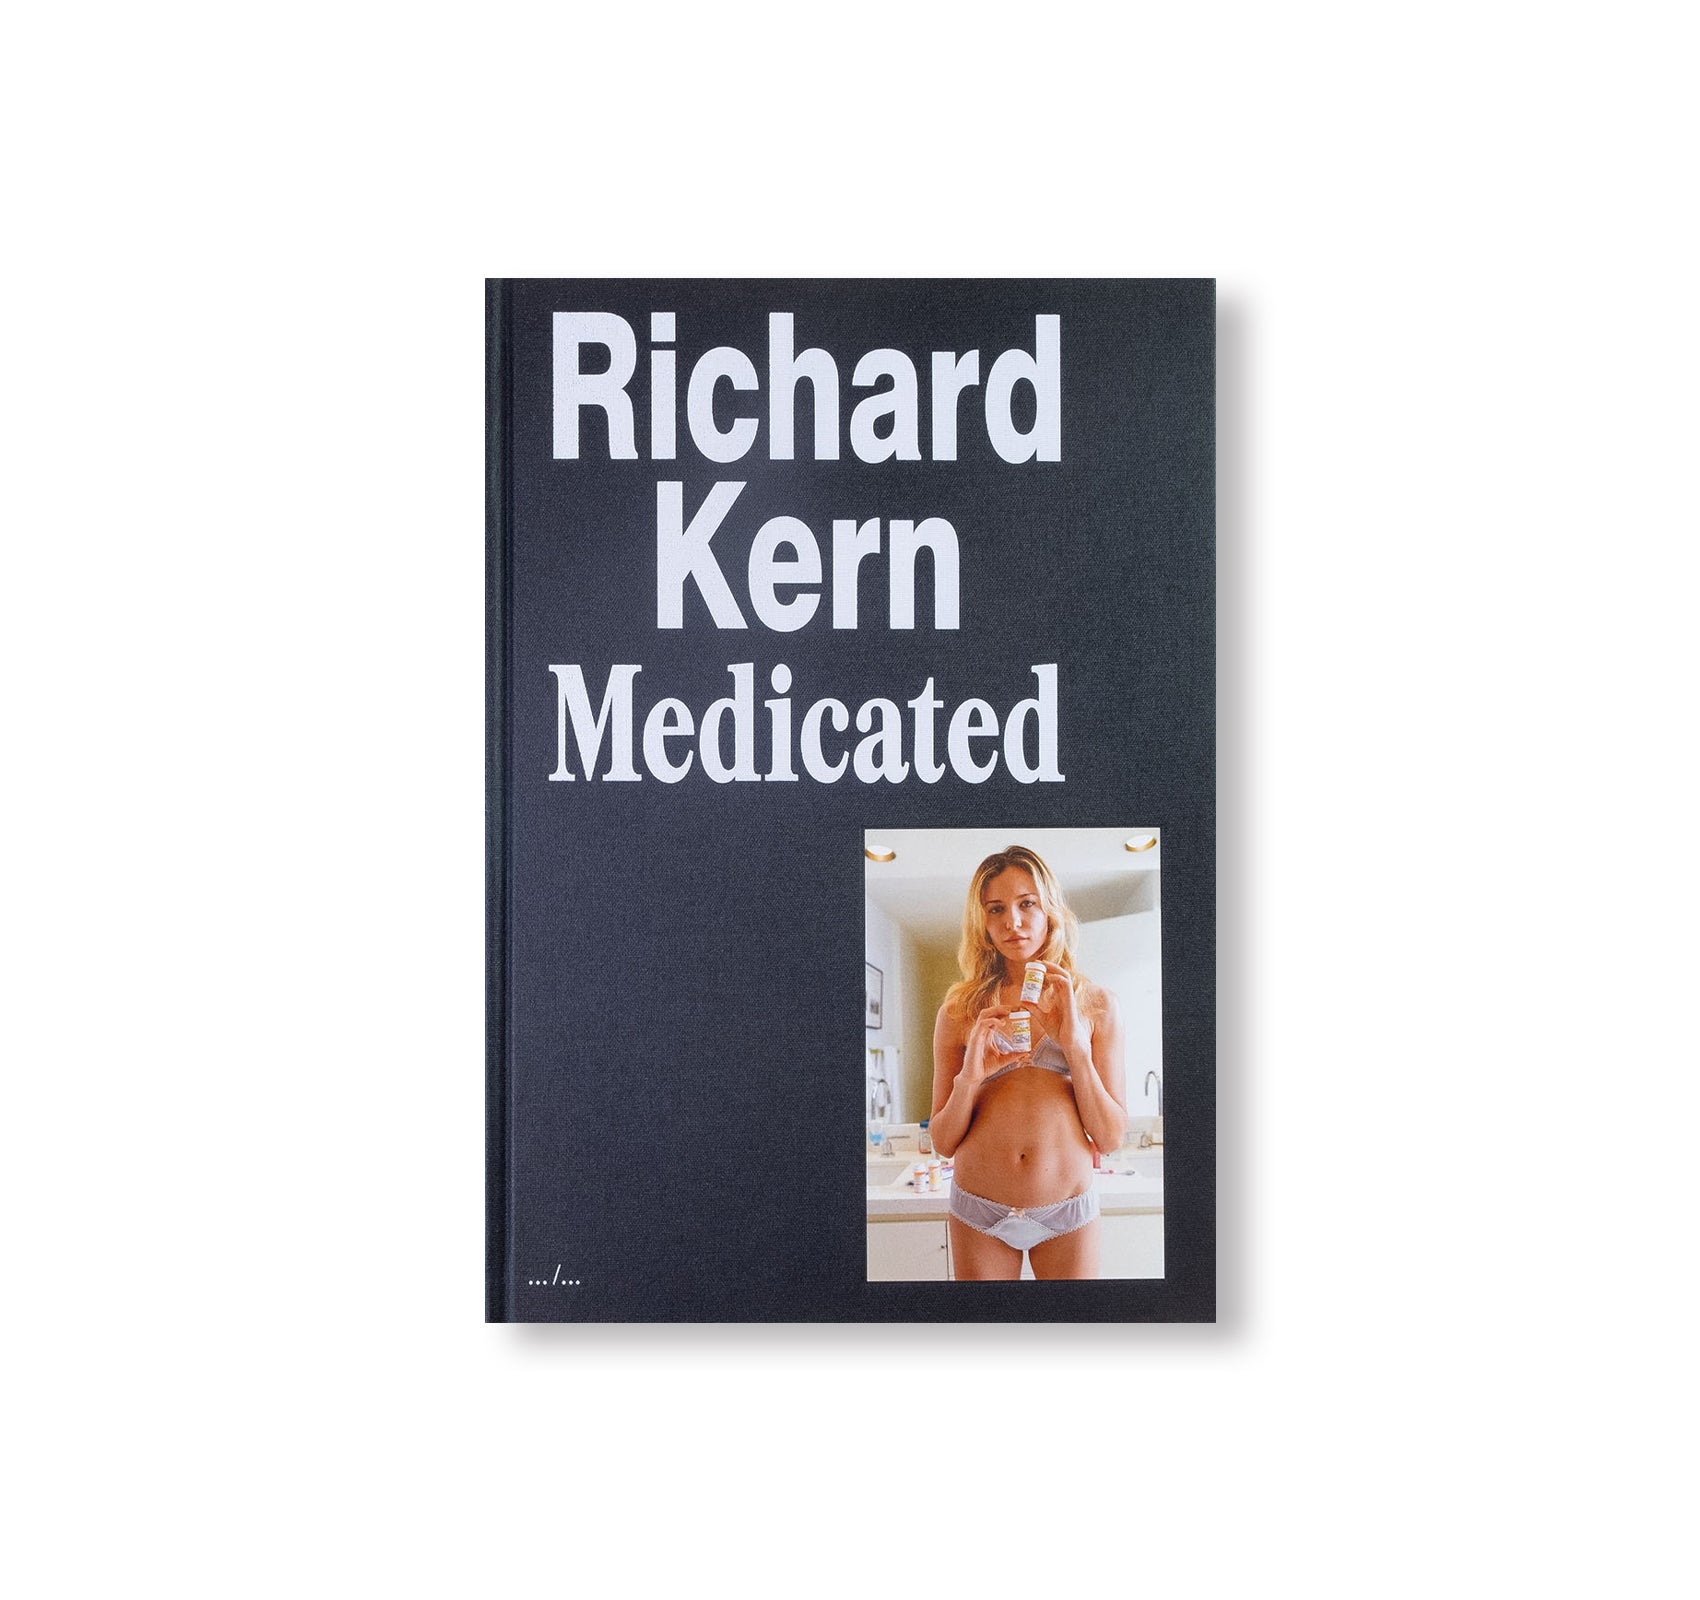 MEDICATED by Richard Kern